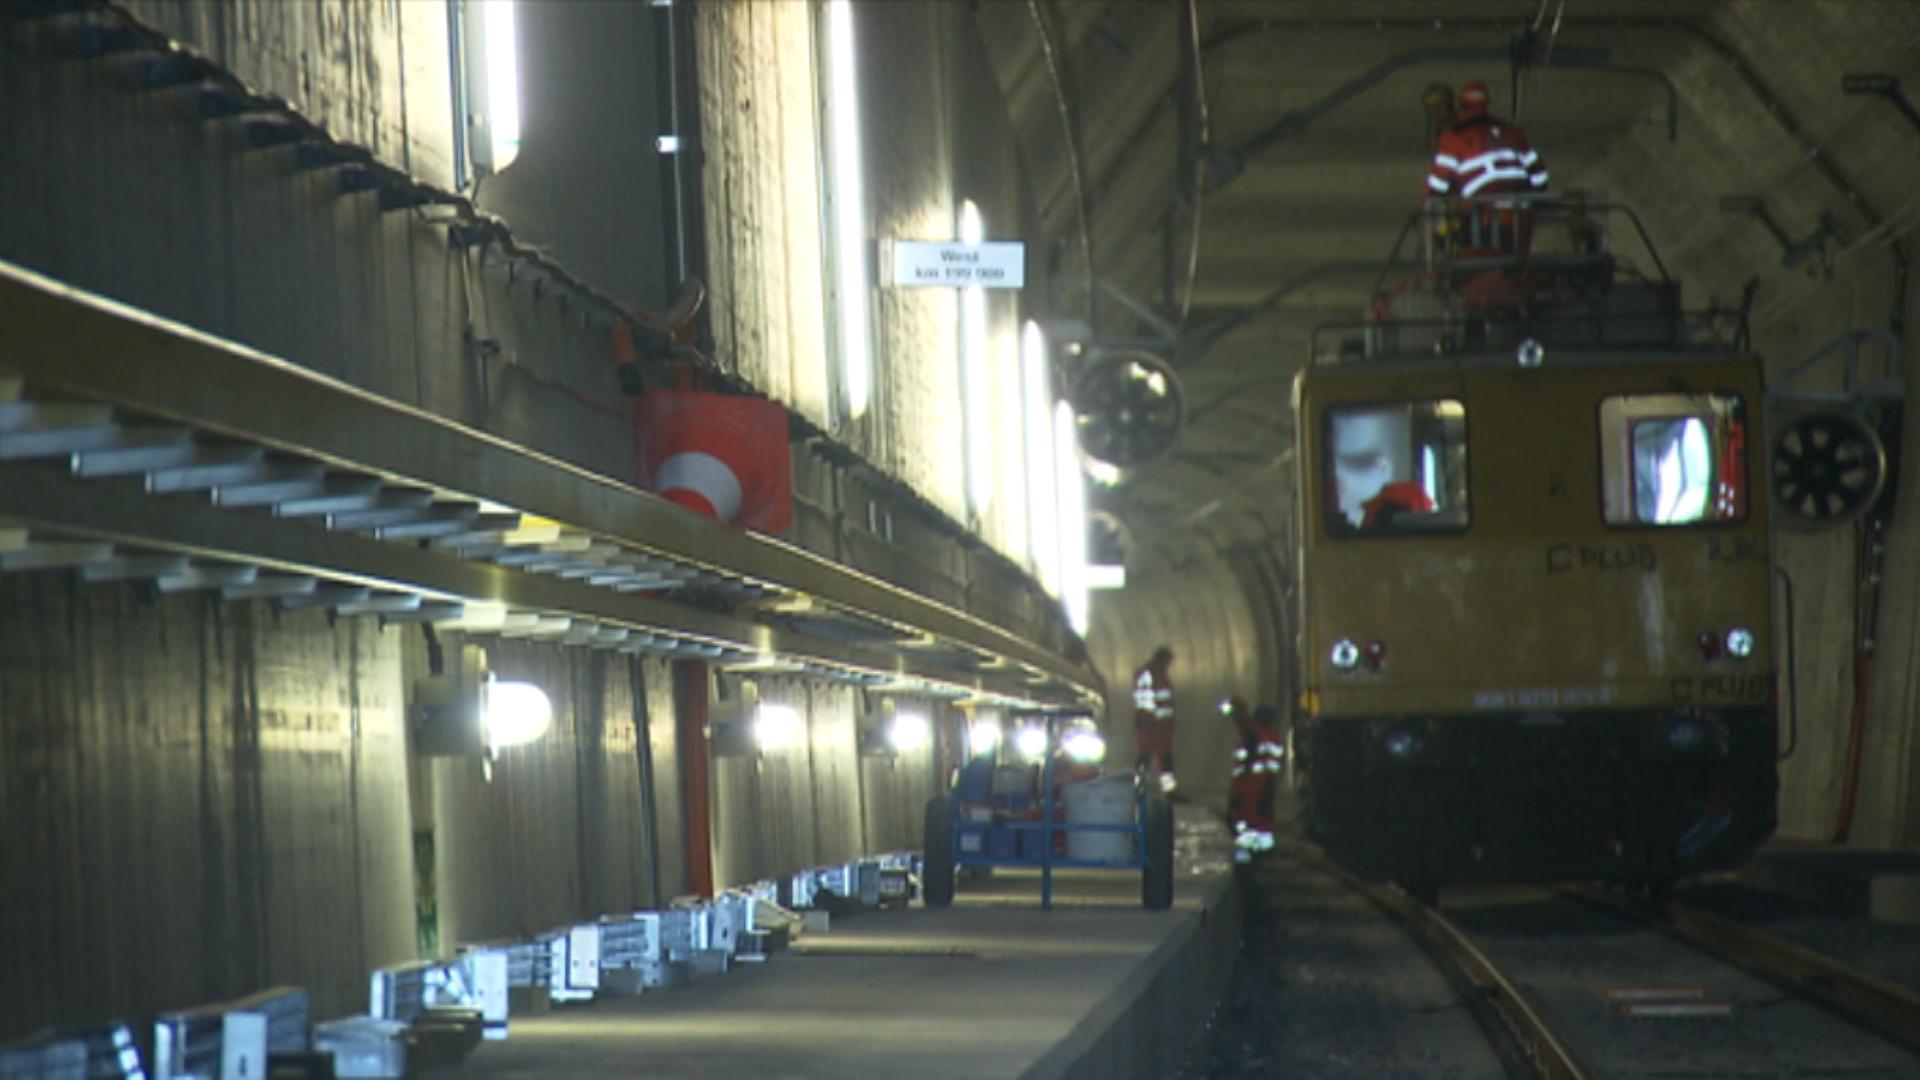 Gotthard tunnel under construction